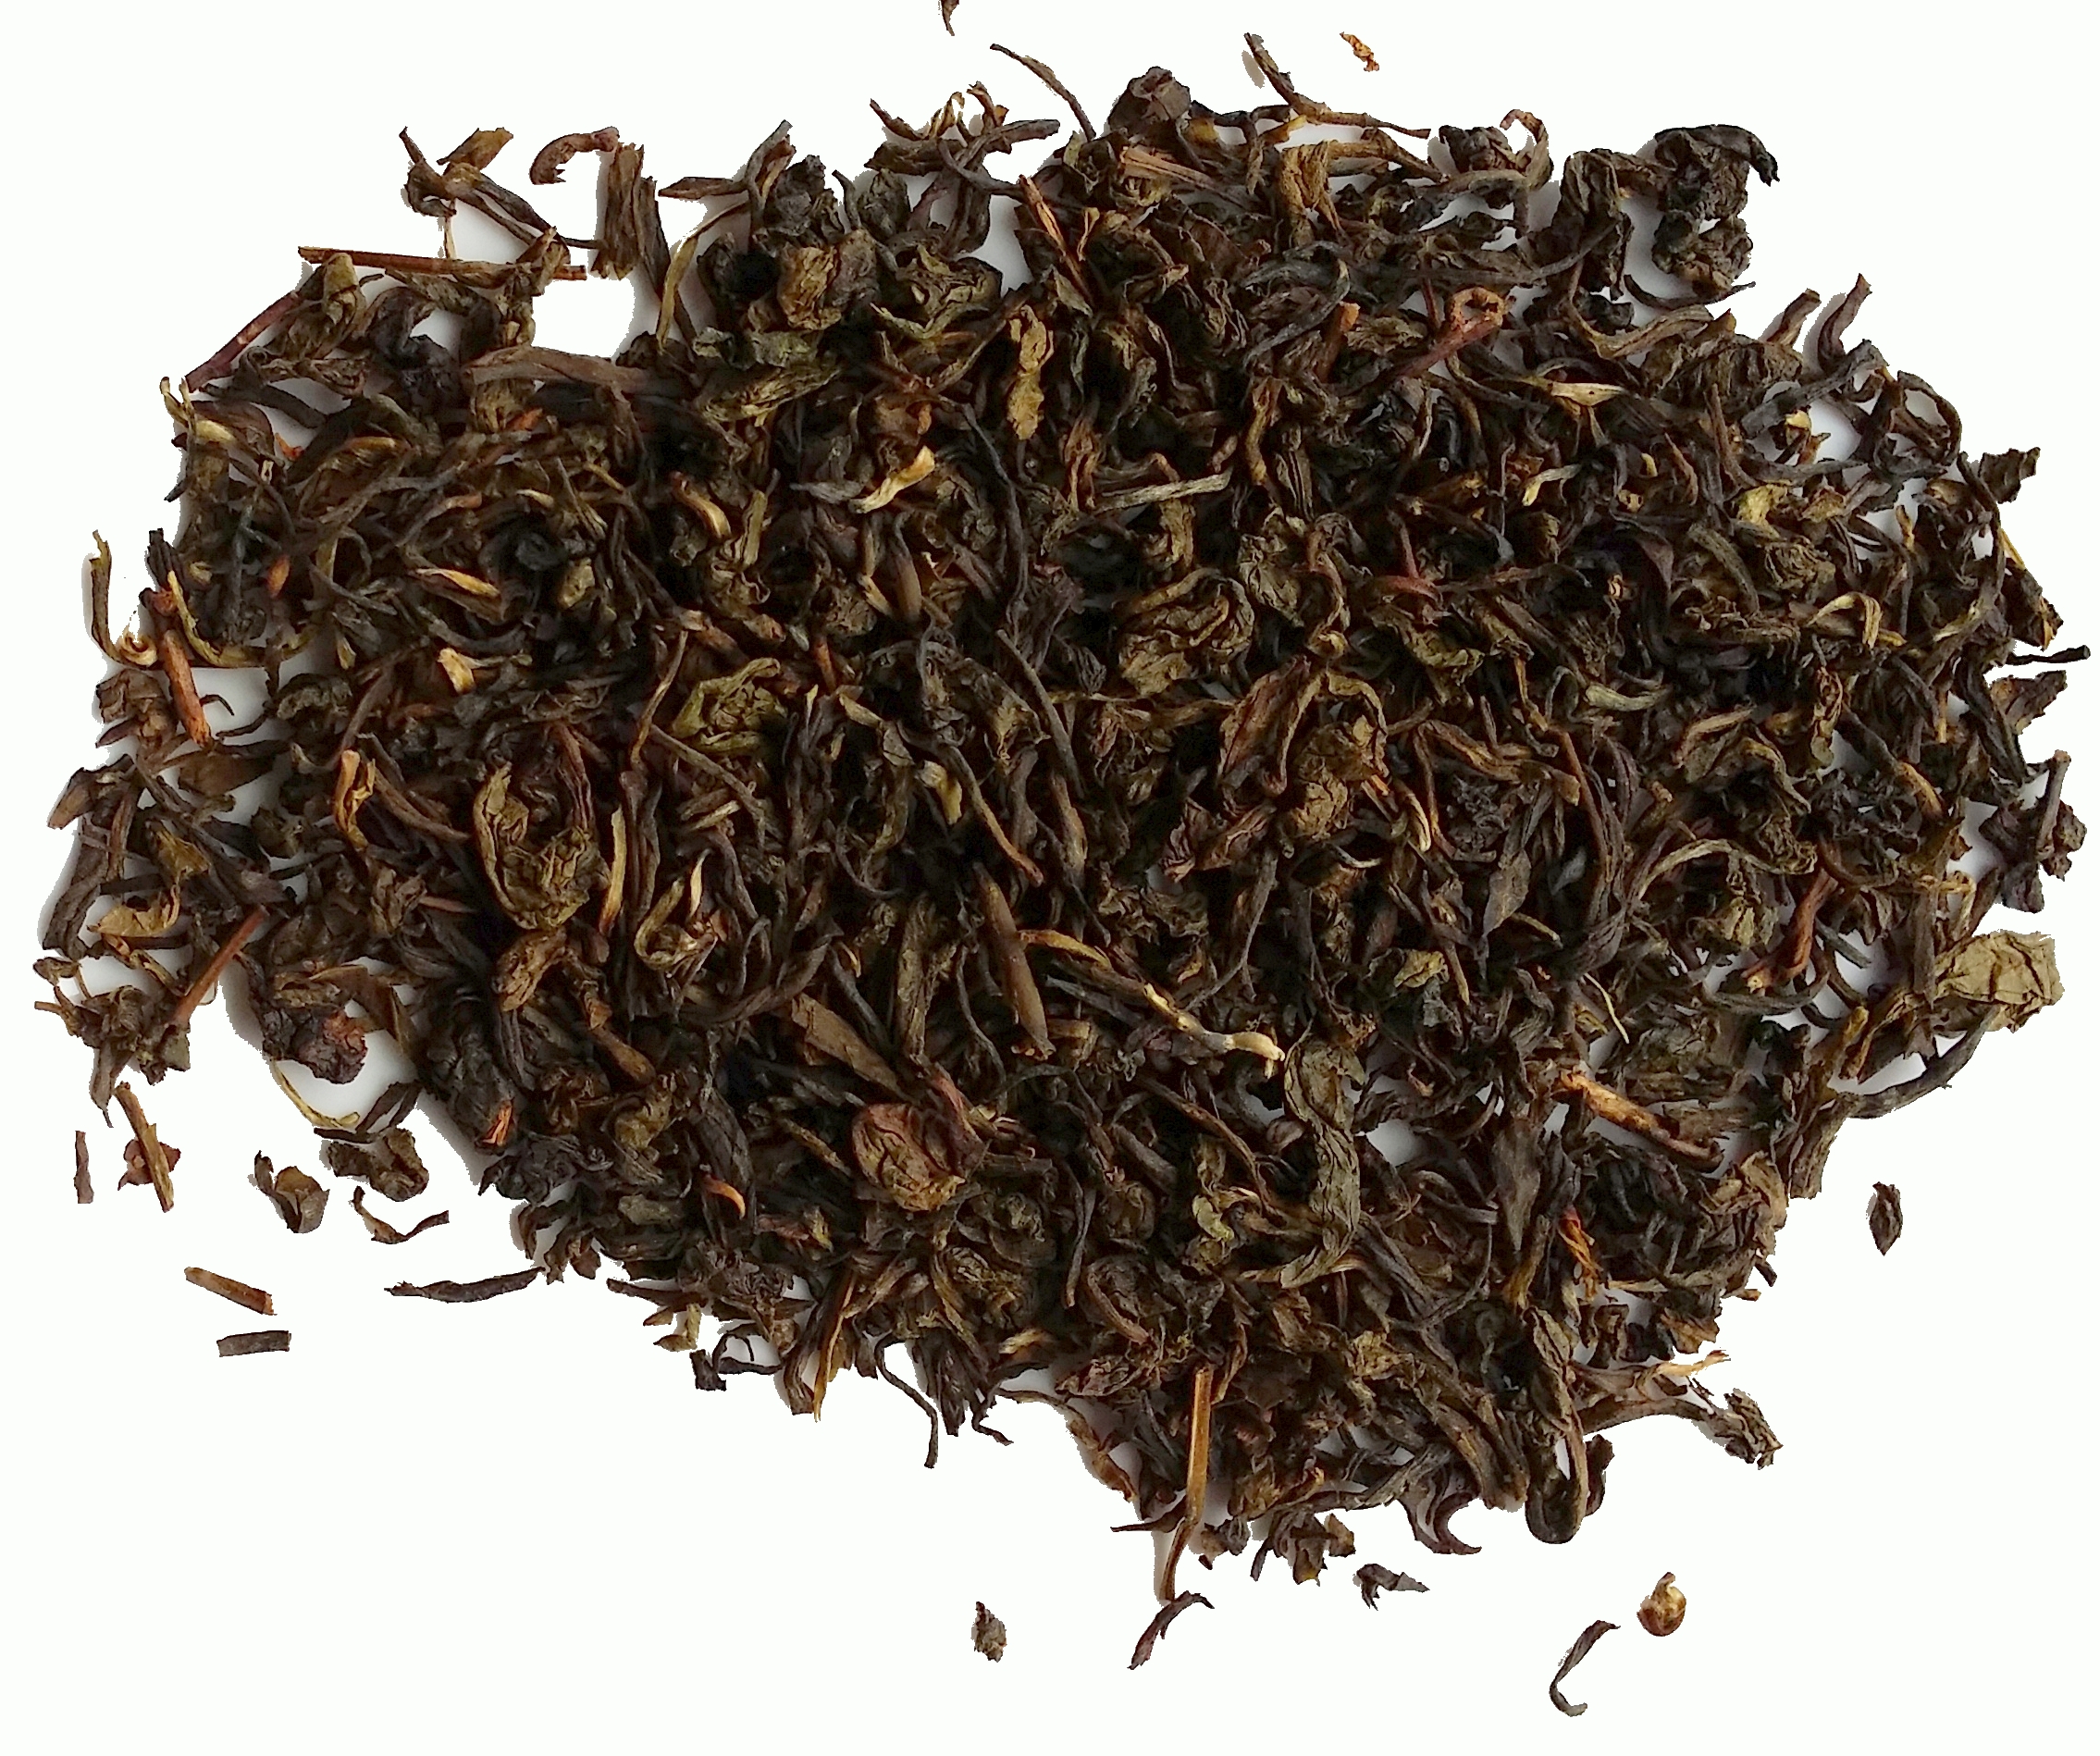 Details about 400 g China Kwai Flower, green tea 0.9 lbs [n582 xu]